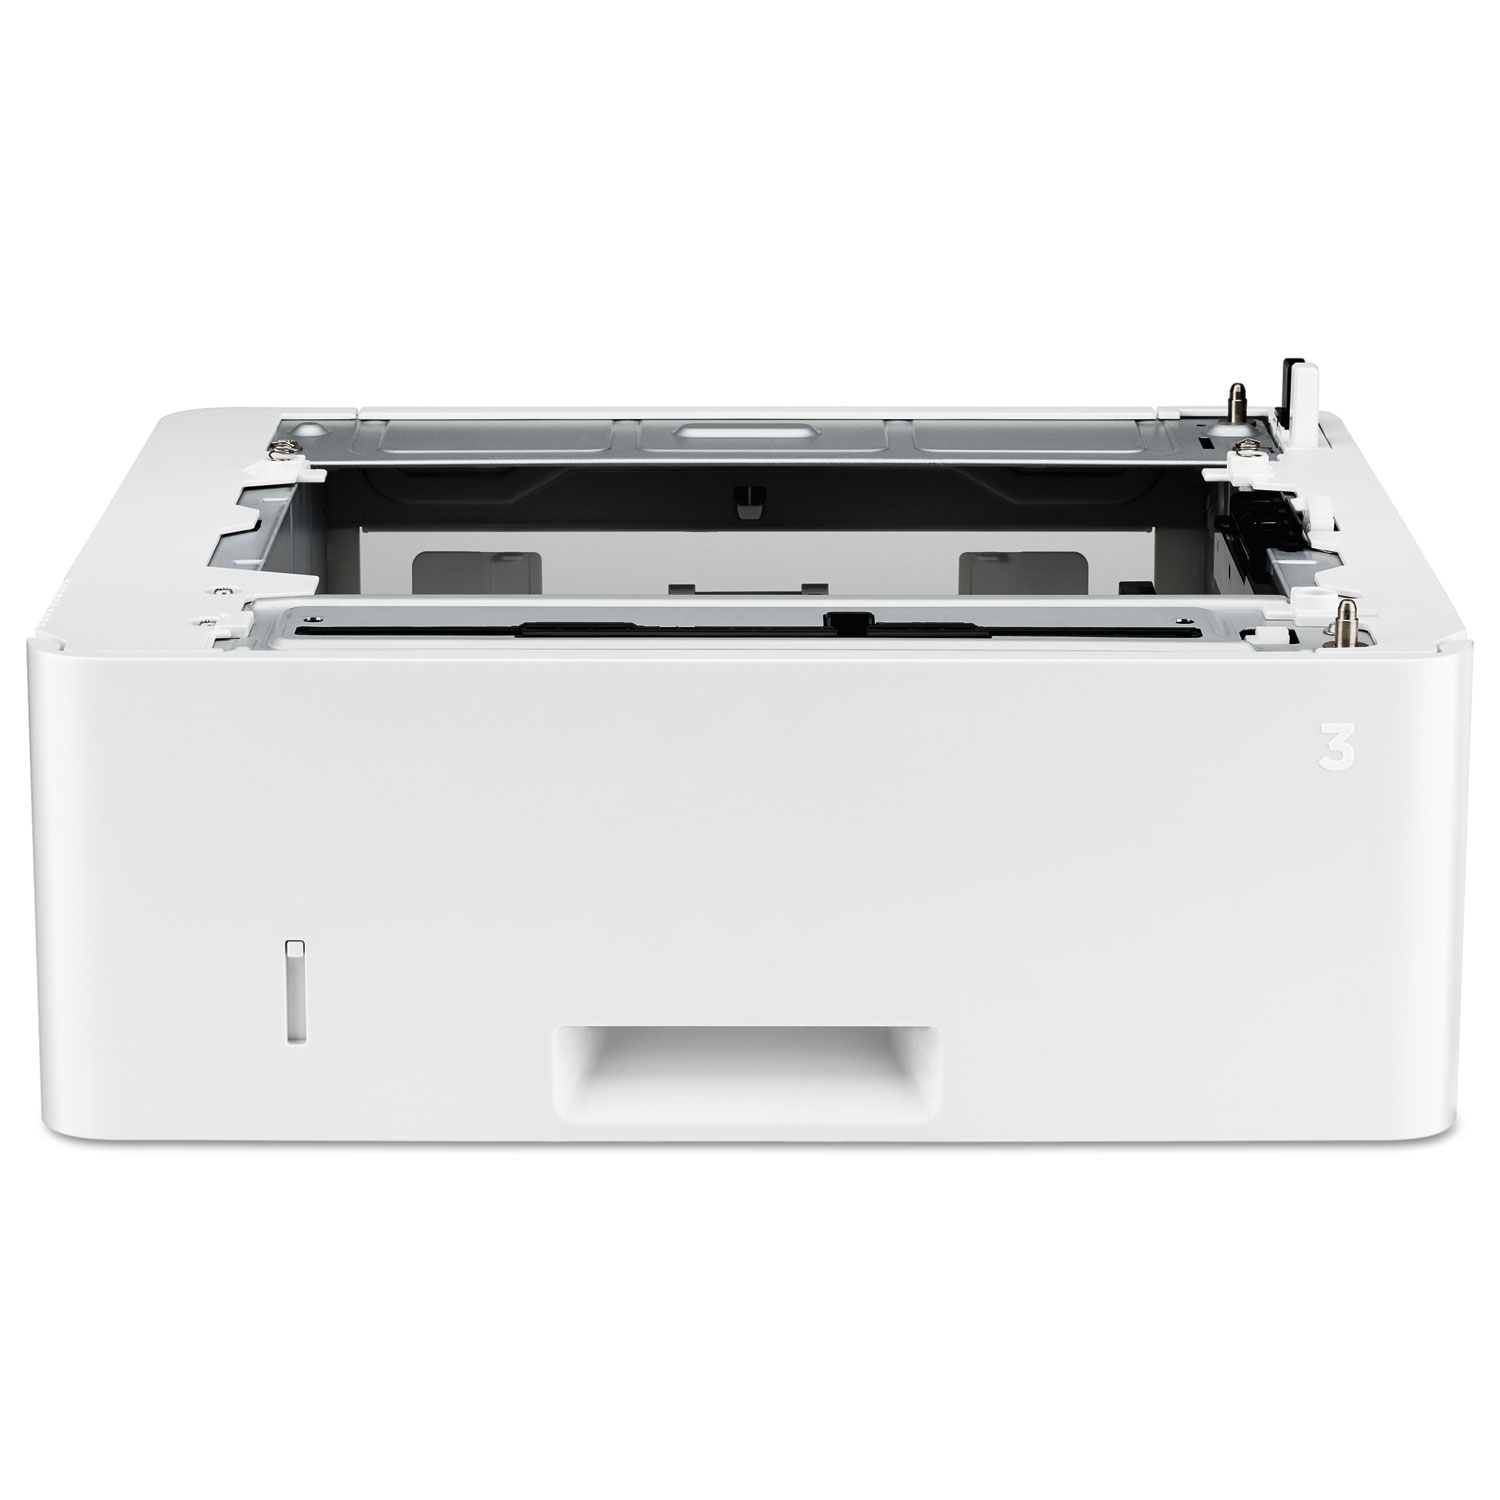 550-Sheet Feeder Tray for LaserJet Pro M402 Series Printers